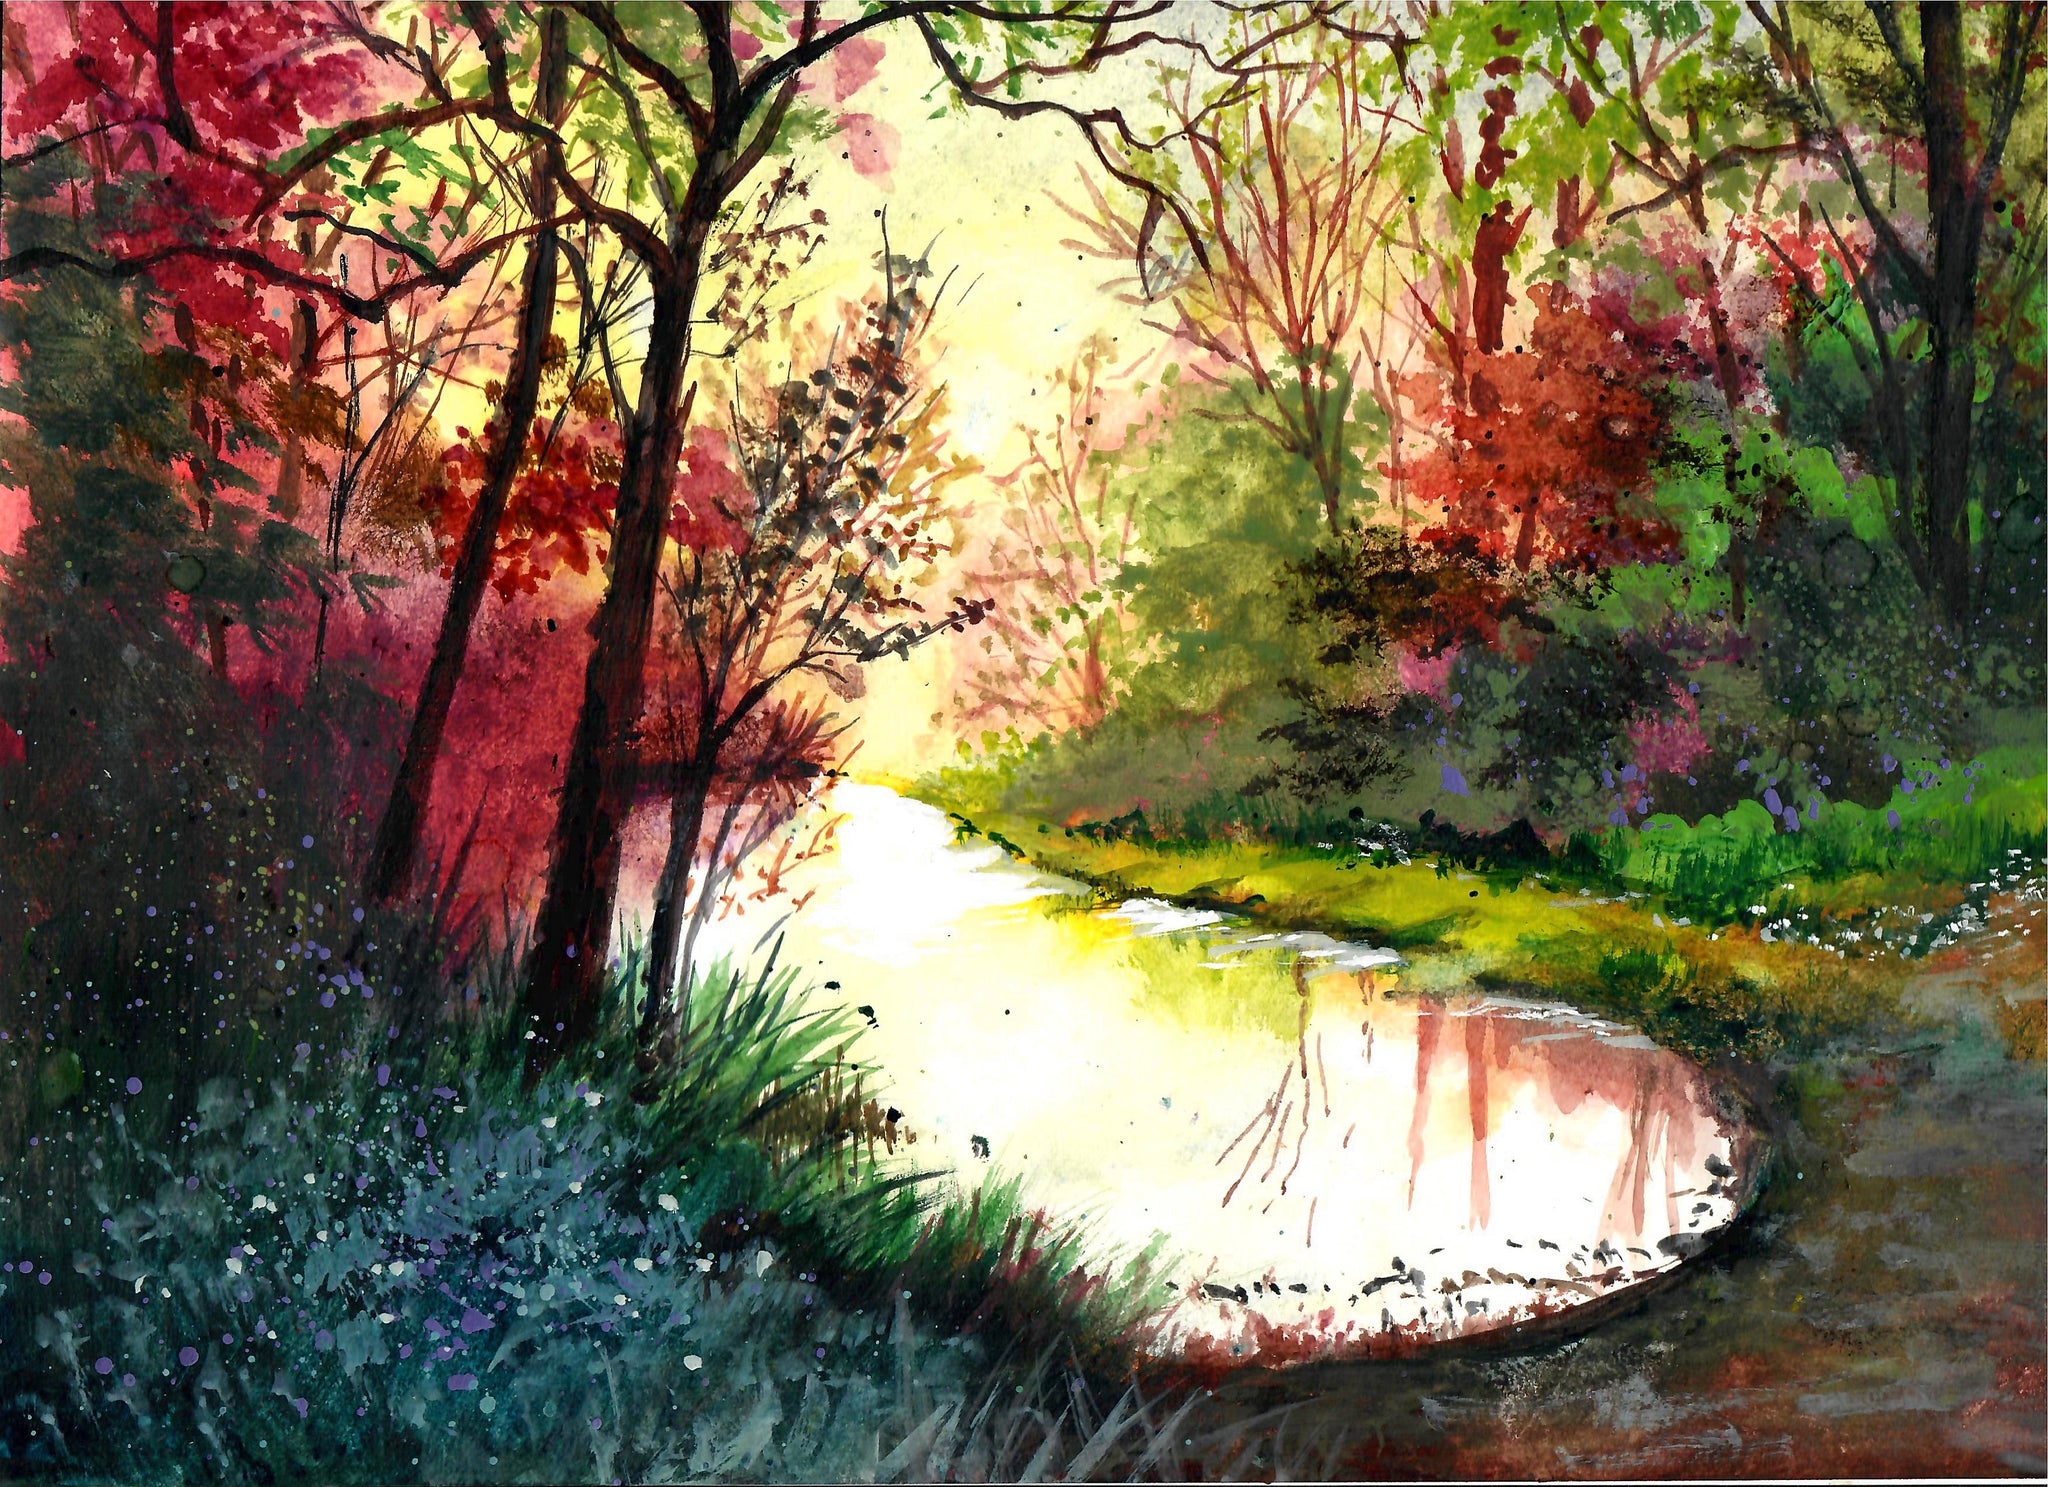 Nature - Colorful Forest Pond, Autumn Foliage, Landscape Art, Colorful Trees